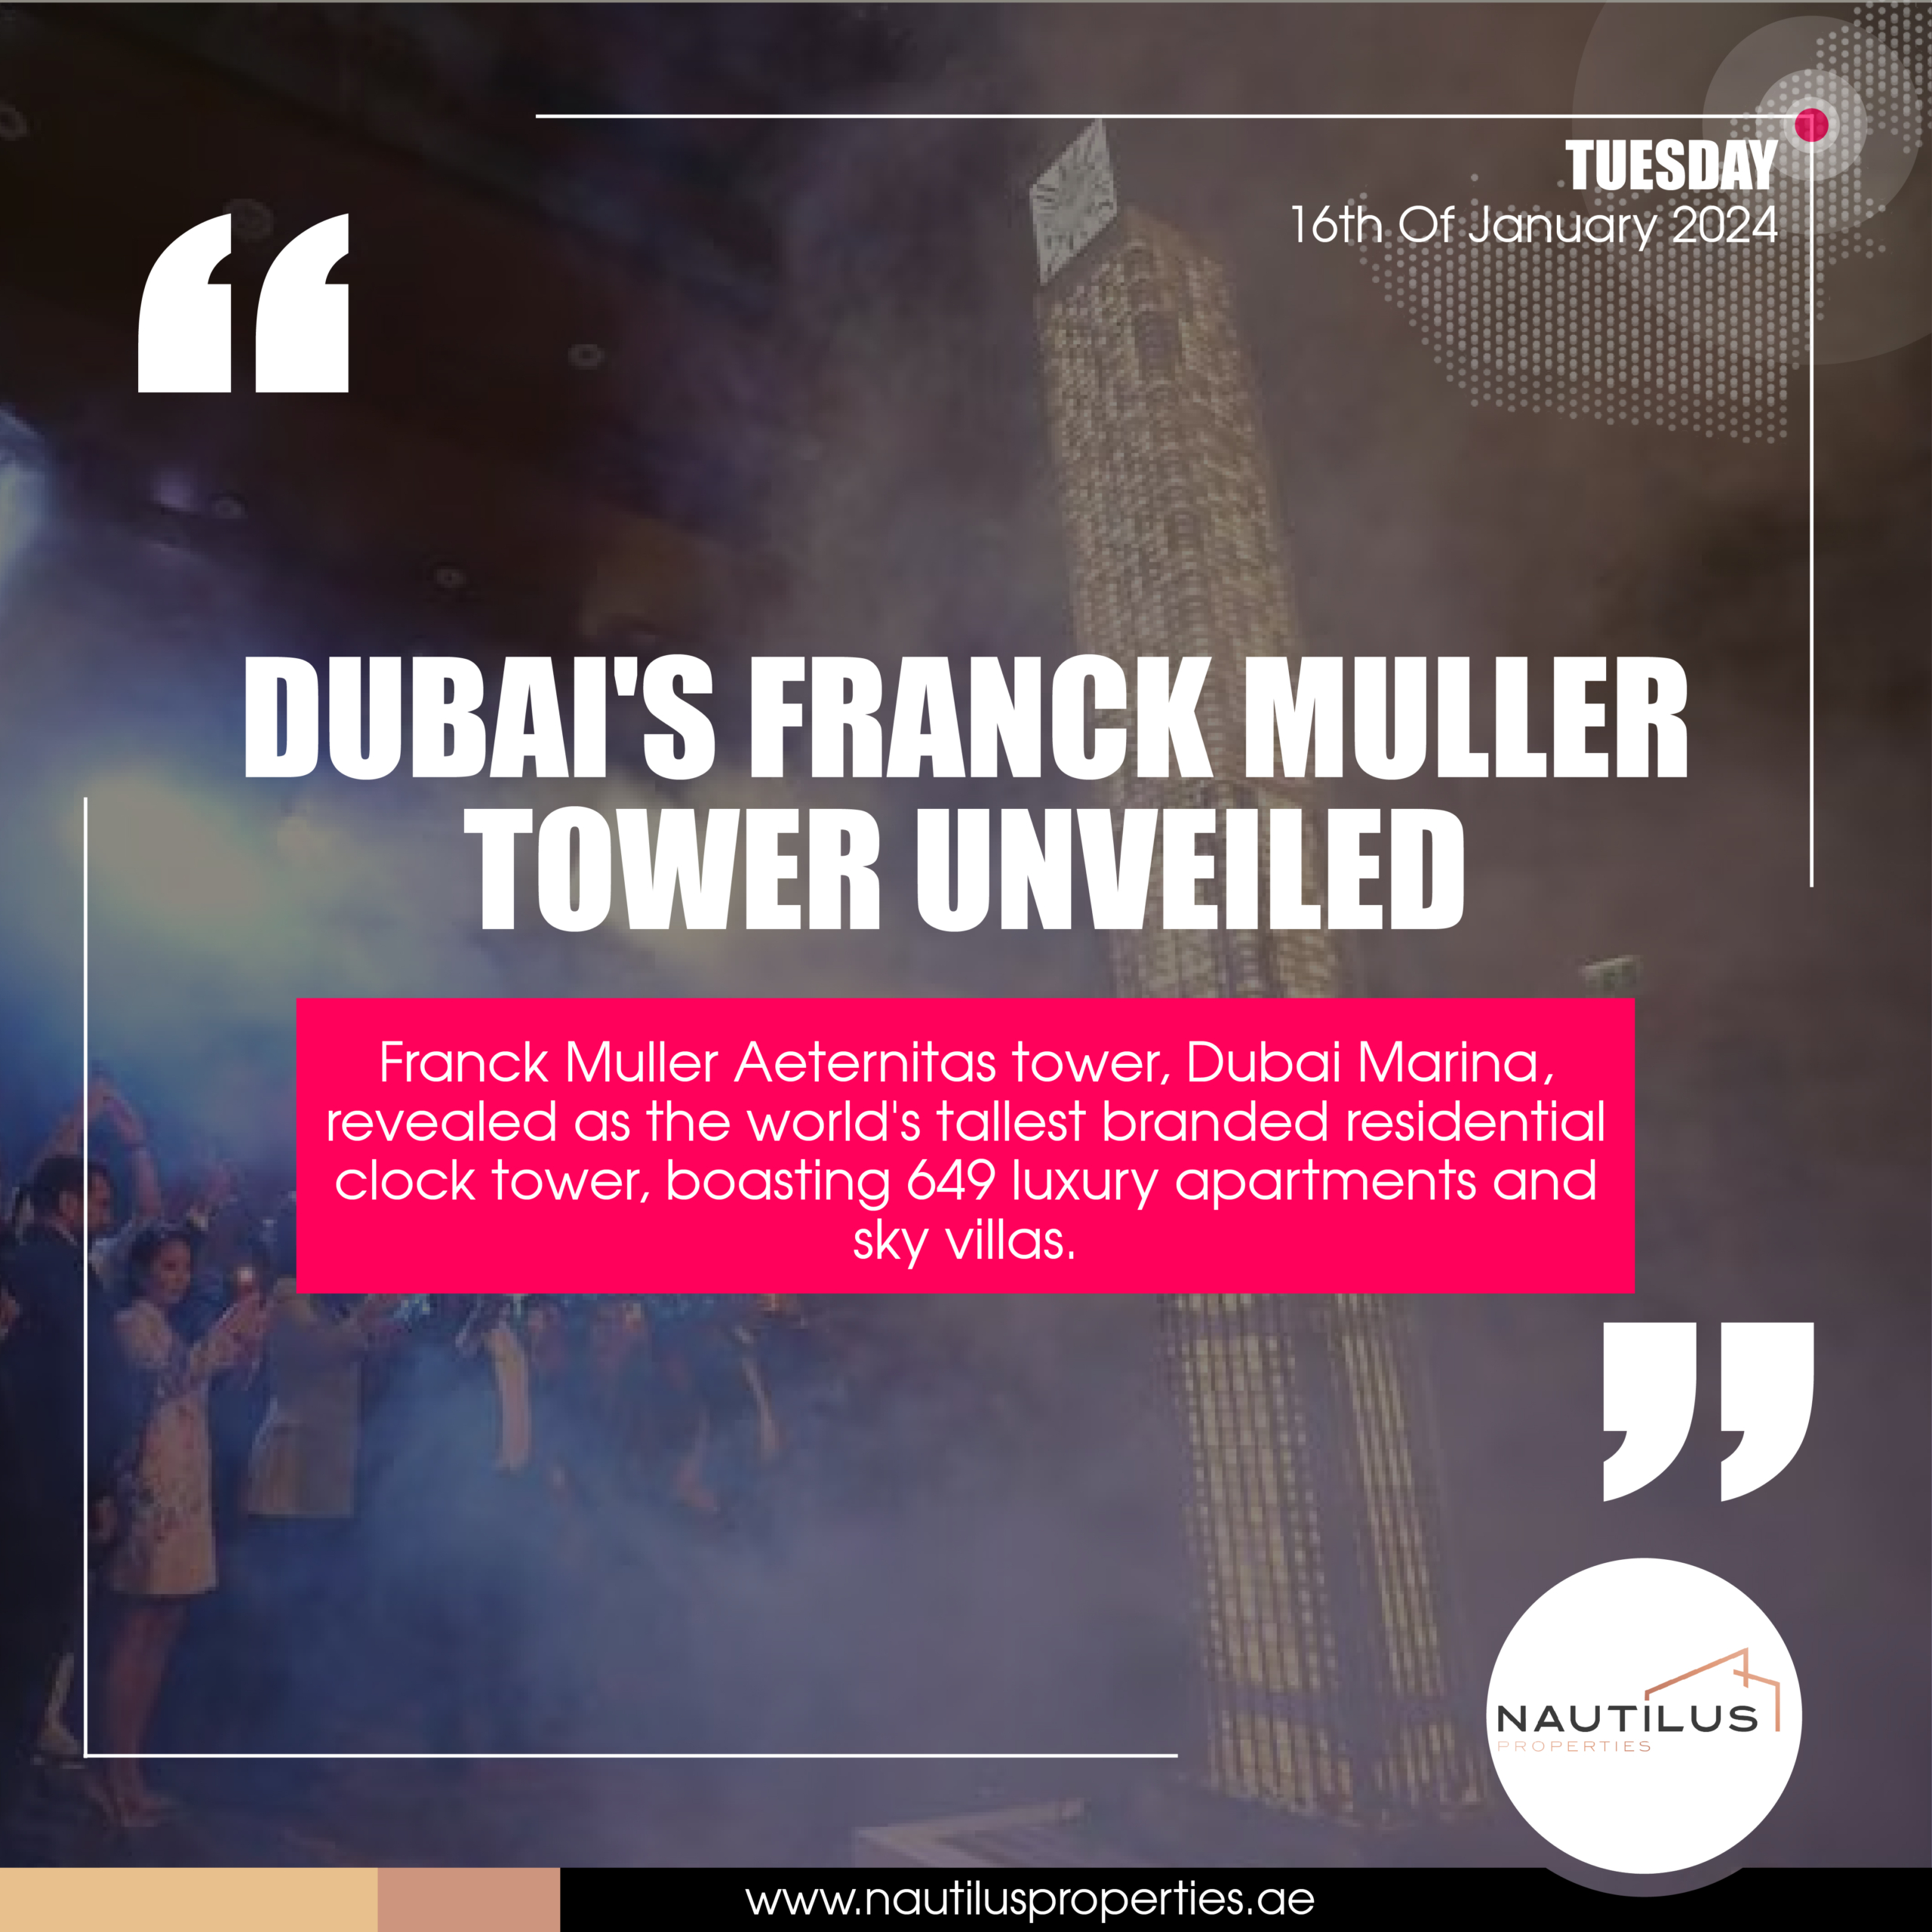 "Lusso senza tempo: svelata la Franck Muller Aeternitas Tower di Dubai"